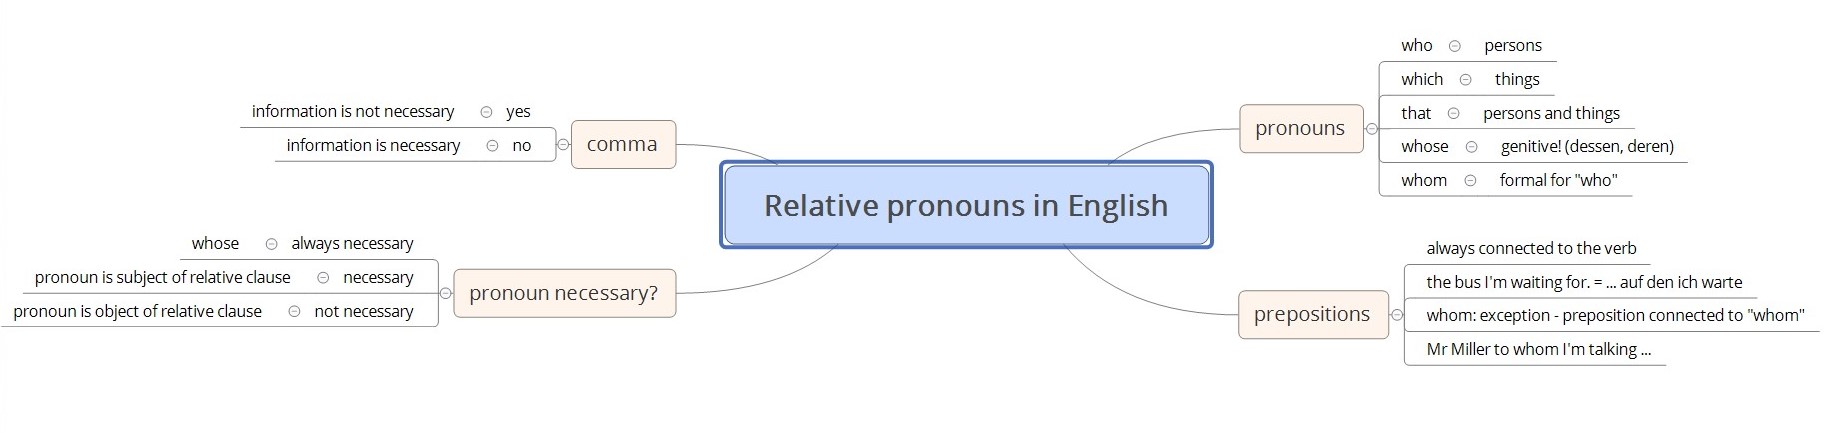 Relative pronouns in English